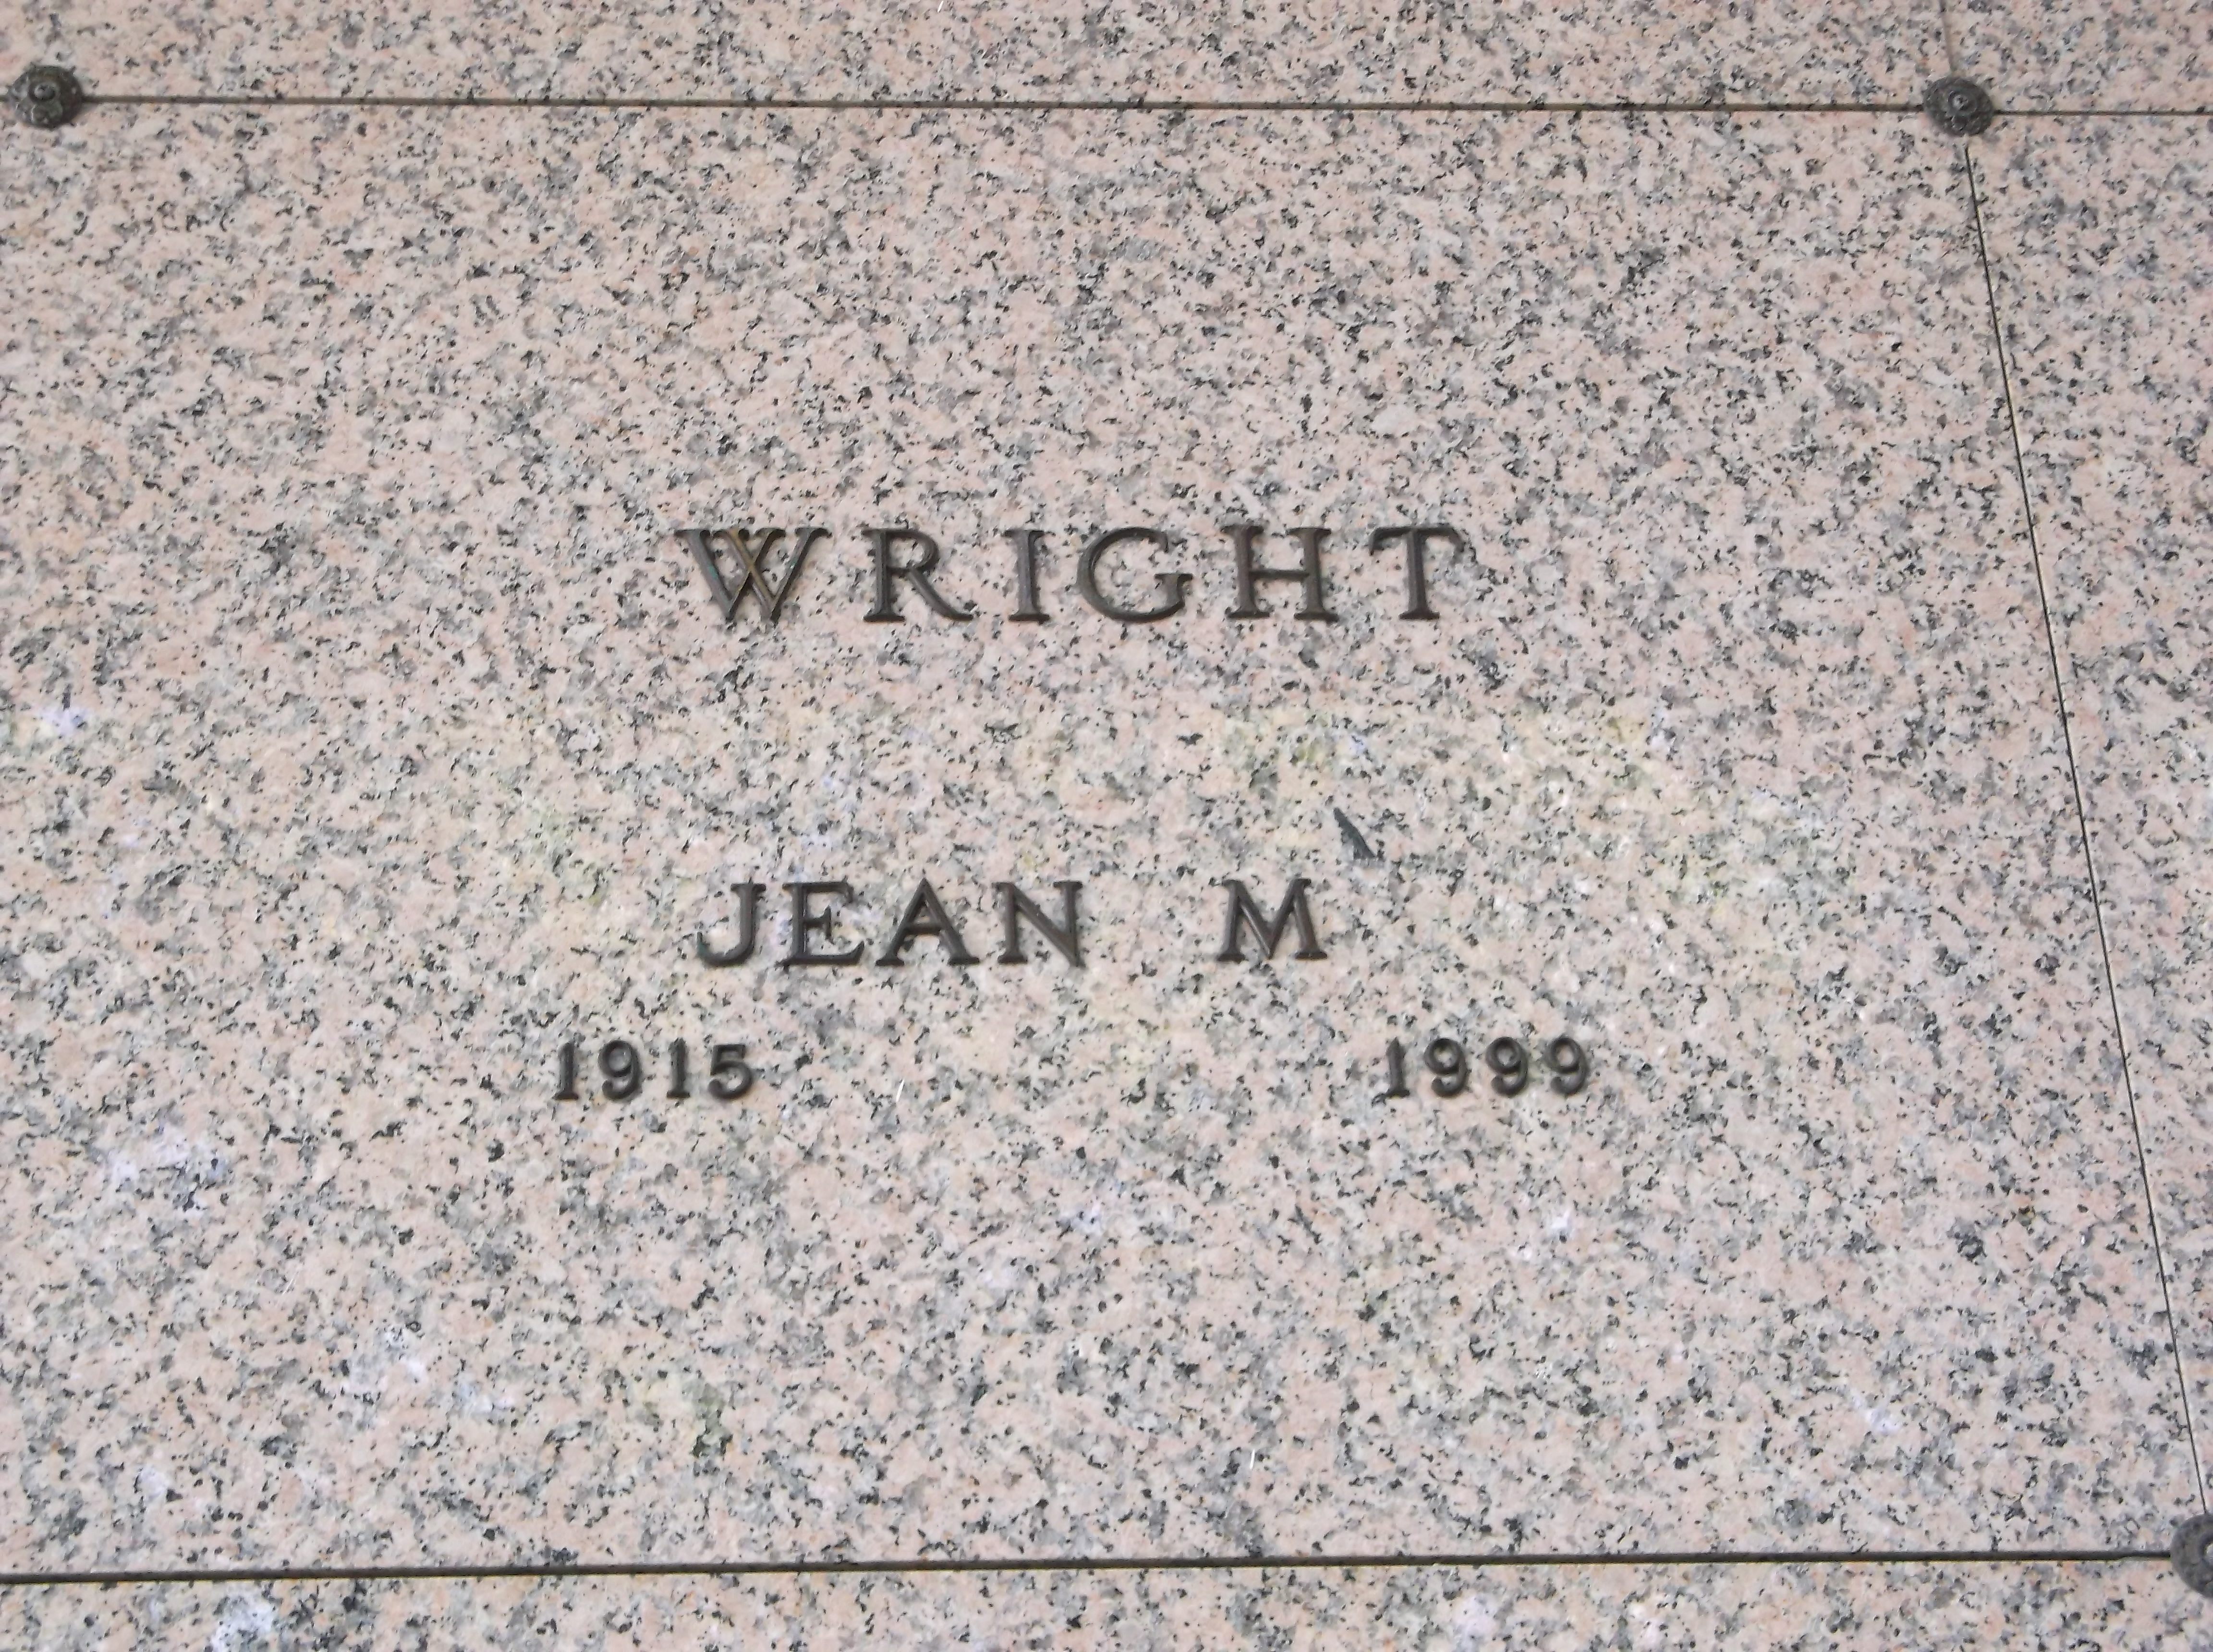 Jean M Wright